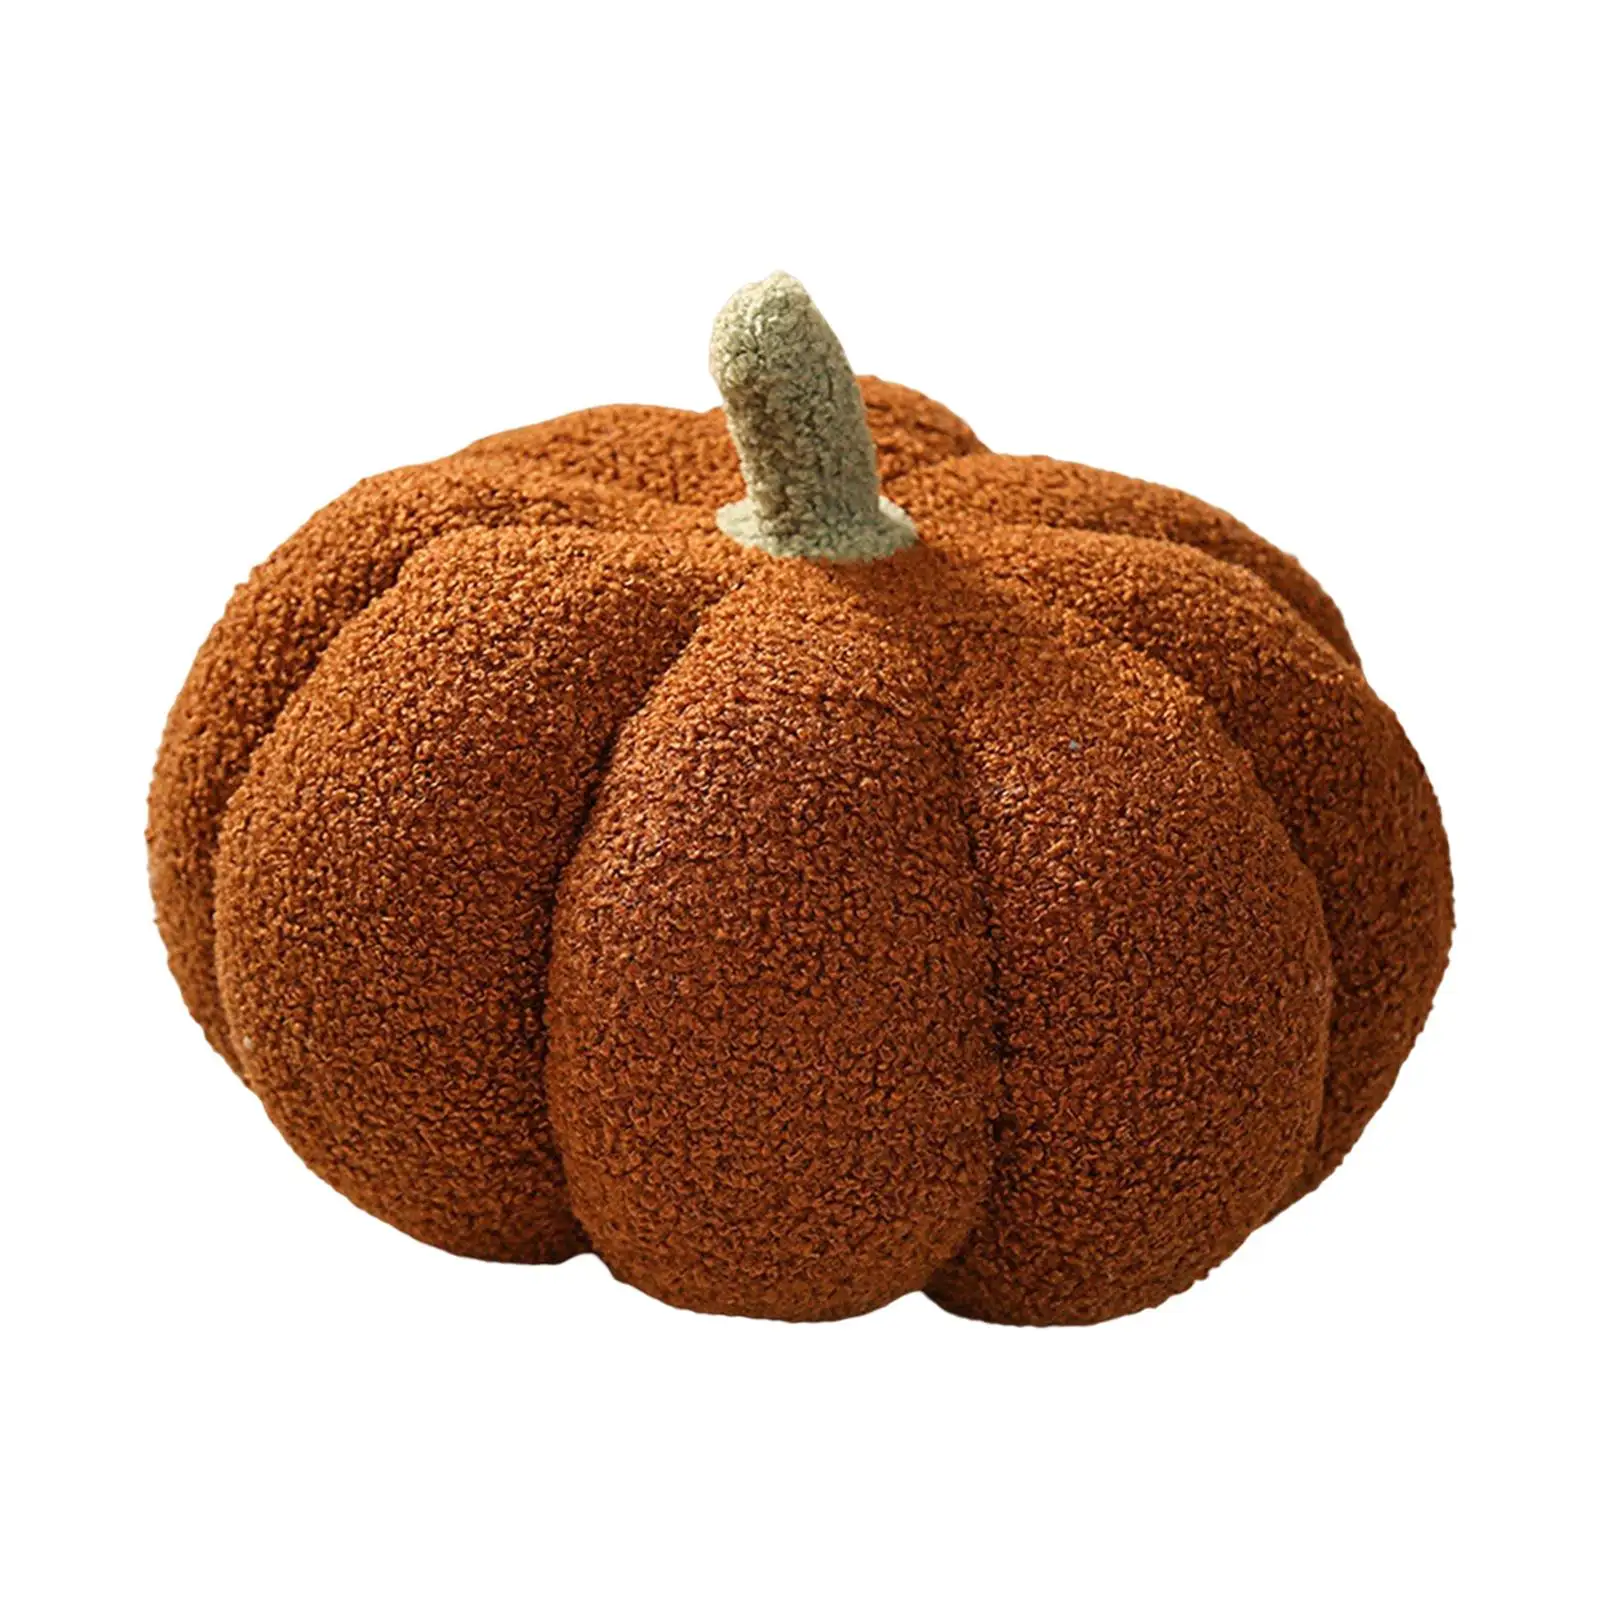 Pumpkin Throw Pillow Multi Purpose convenient Decorative for Halloween Birthday